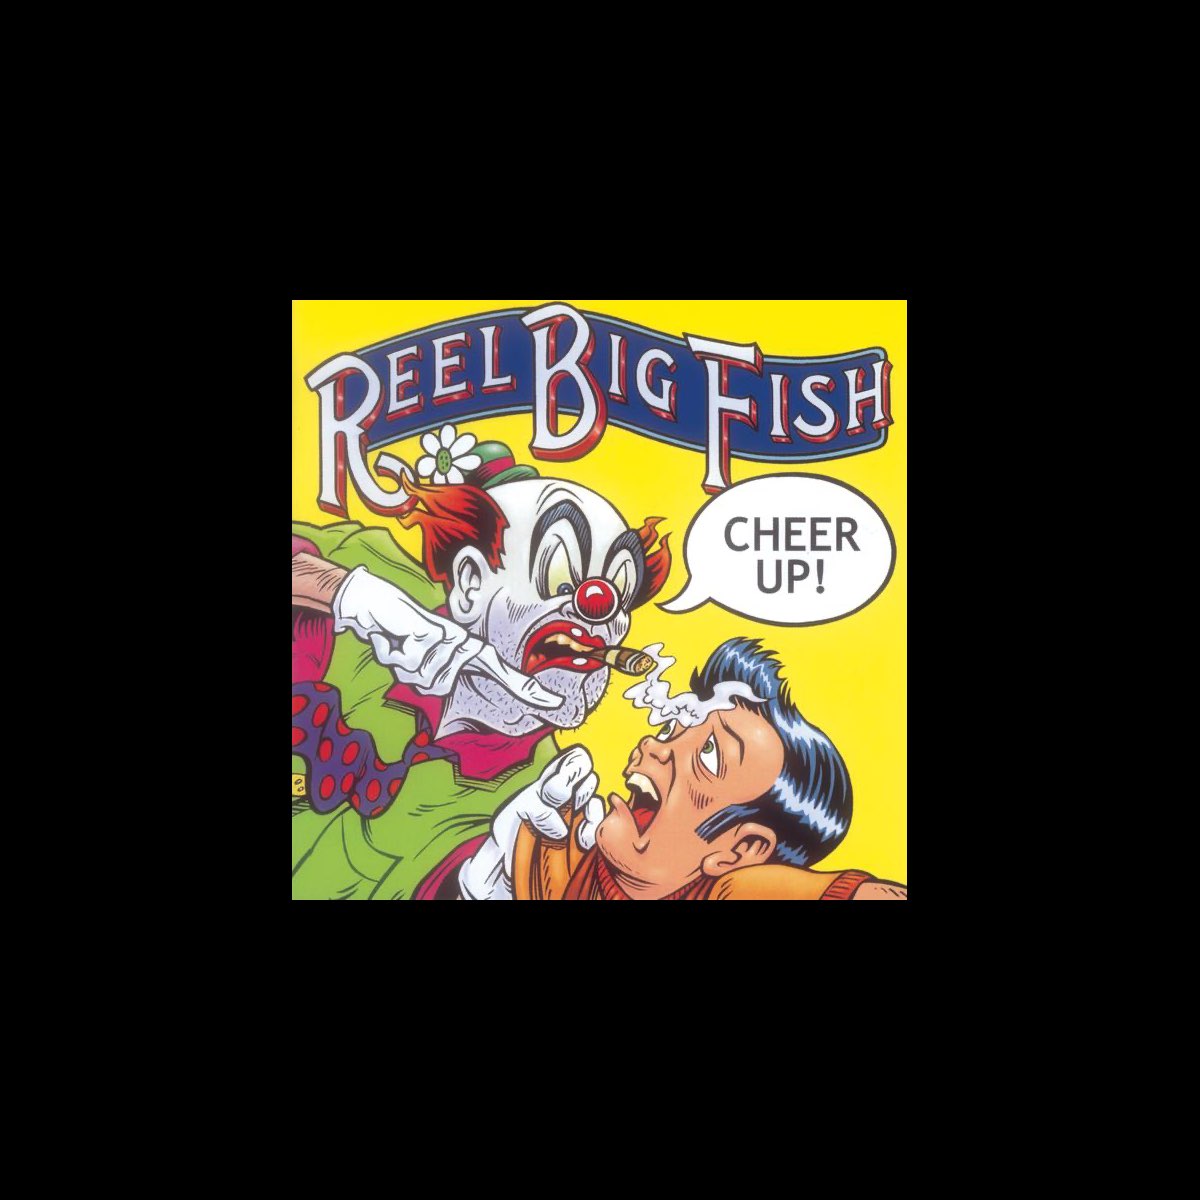 Cheer Up! - Album by Reel Big Fish - Apple Music